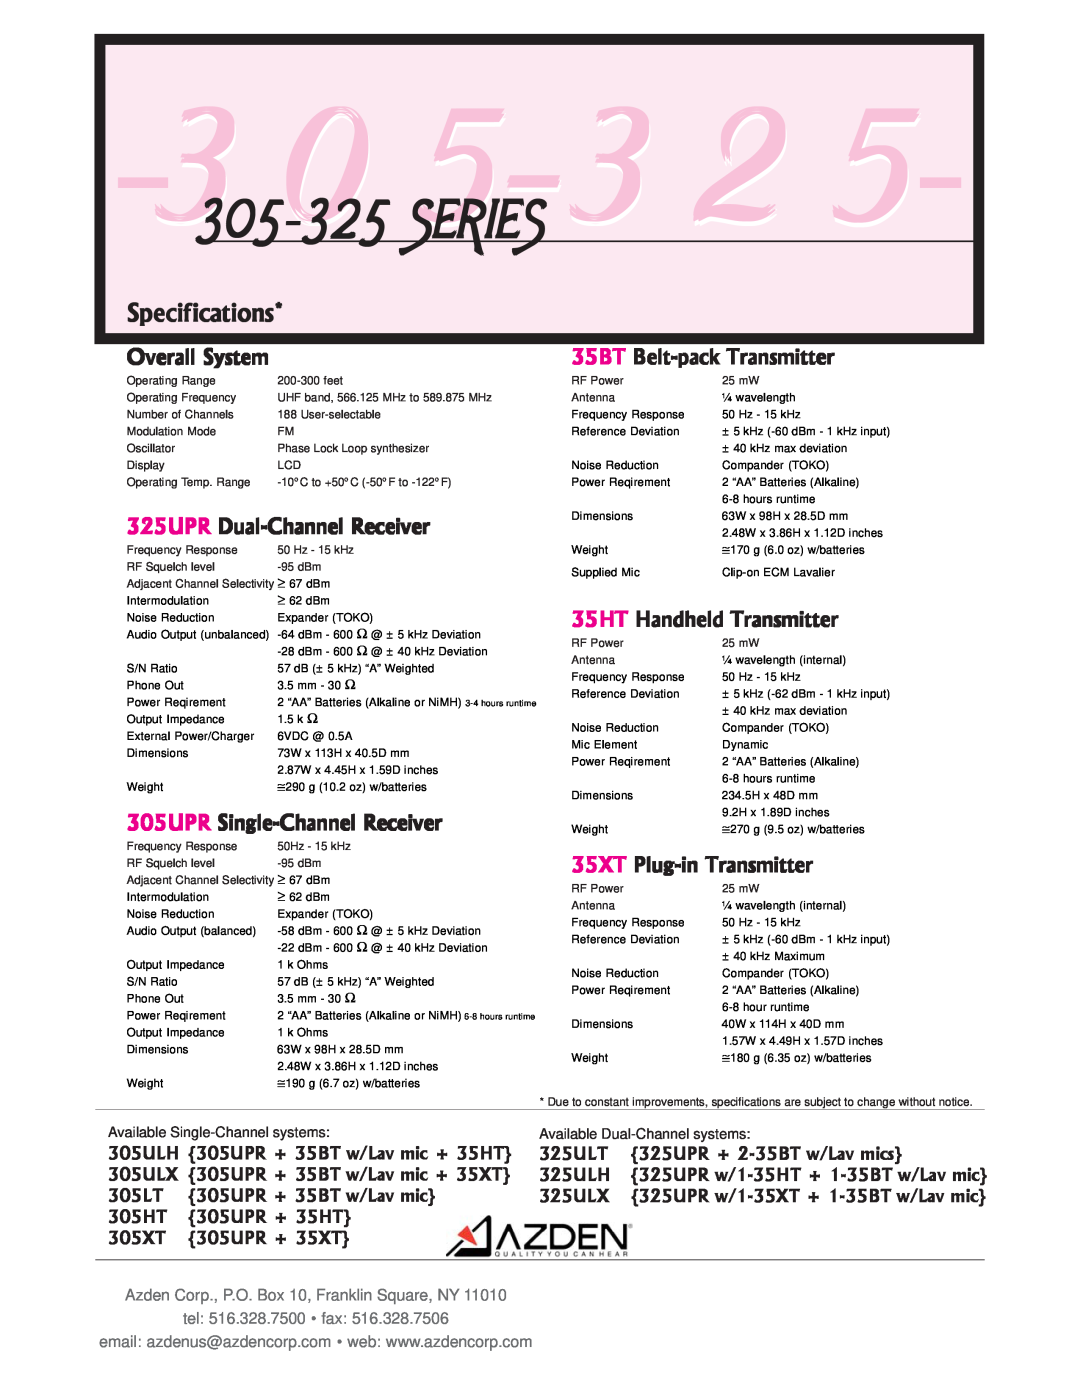 Azden 35XT Specifications, 3 0 5-3 2, Series, Overall System, 35BT Belt-pack Transmitter, 325UPR Dual-Channel Receiver 